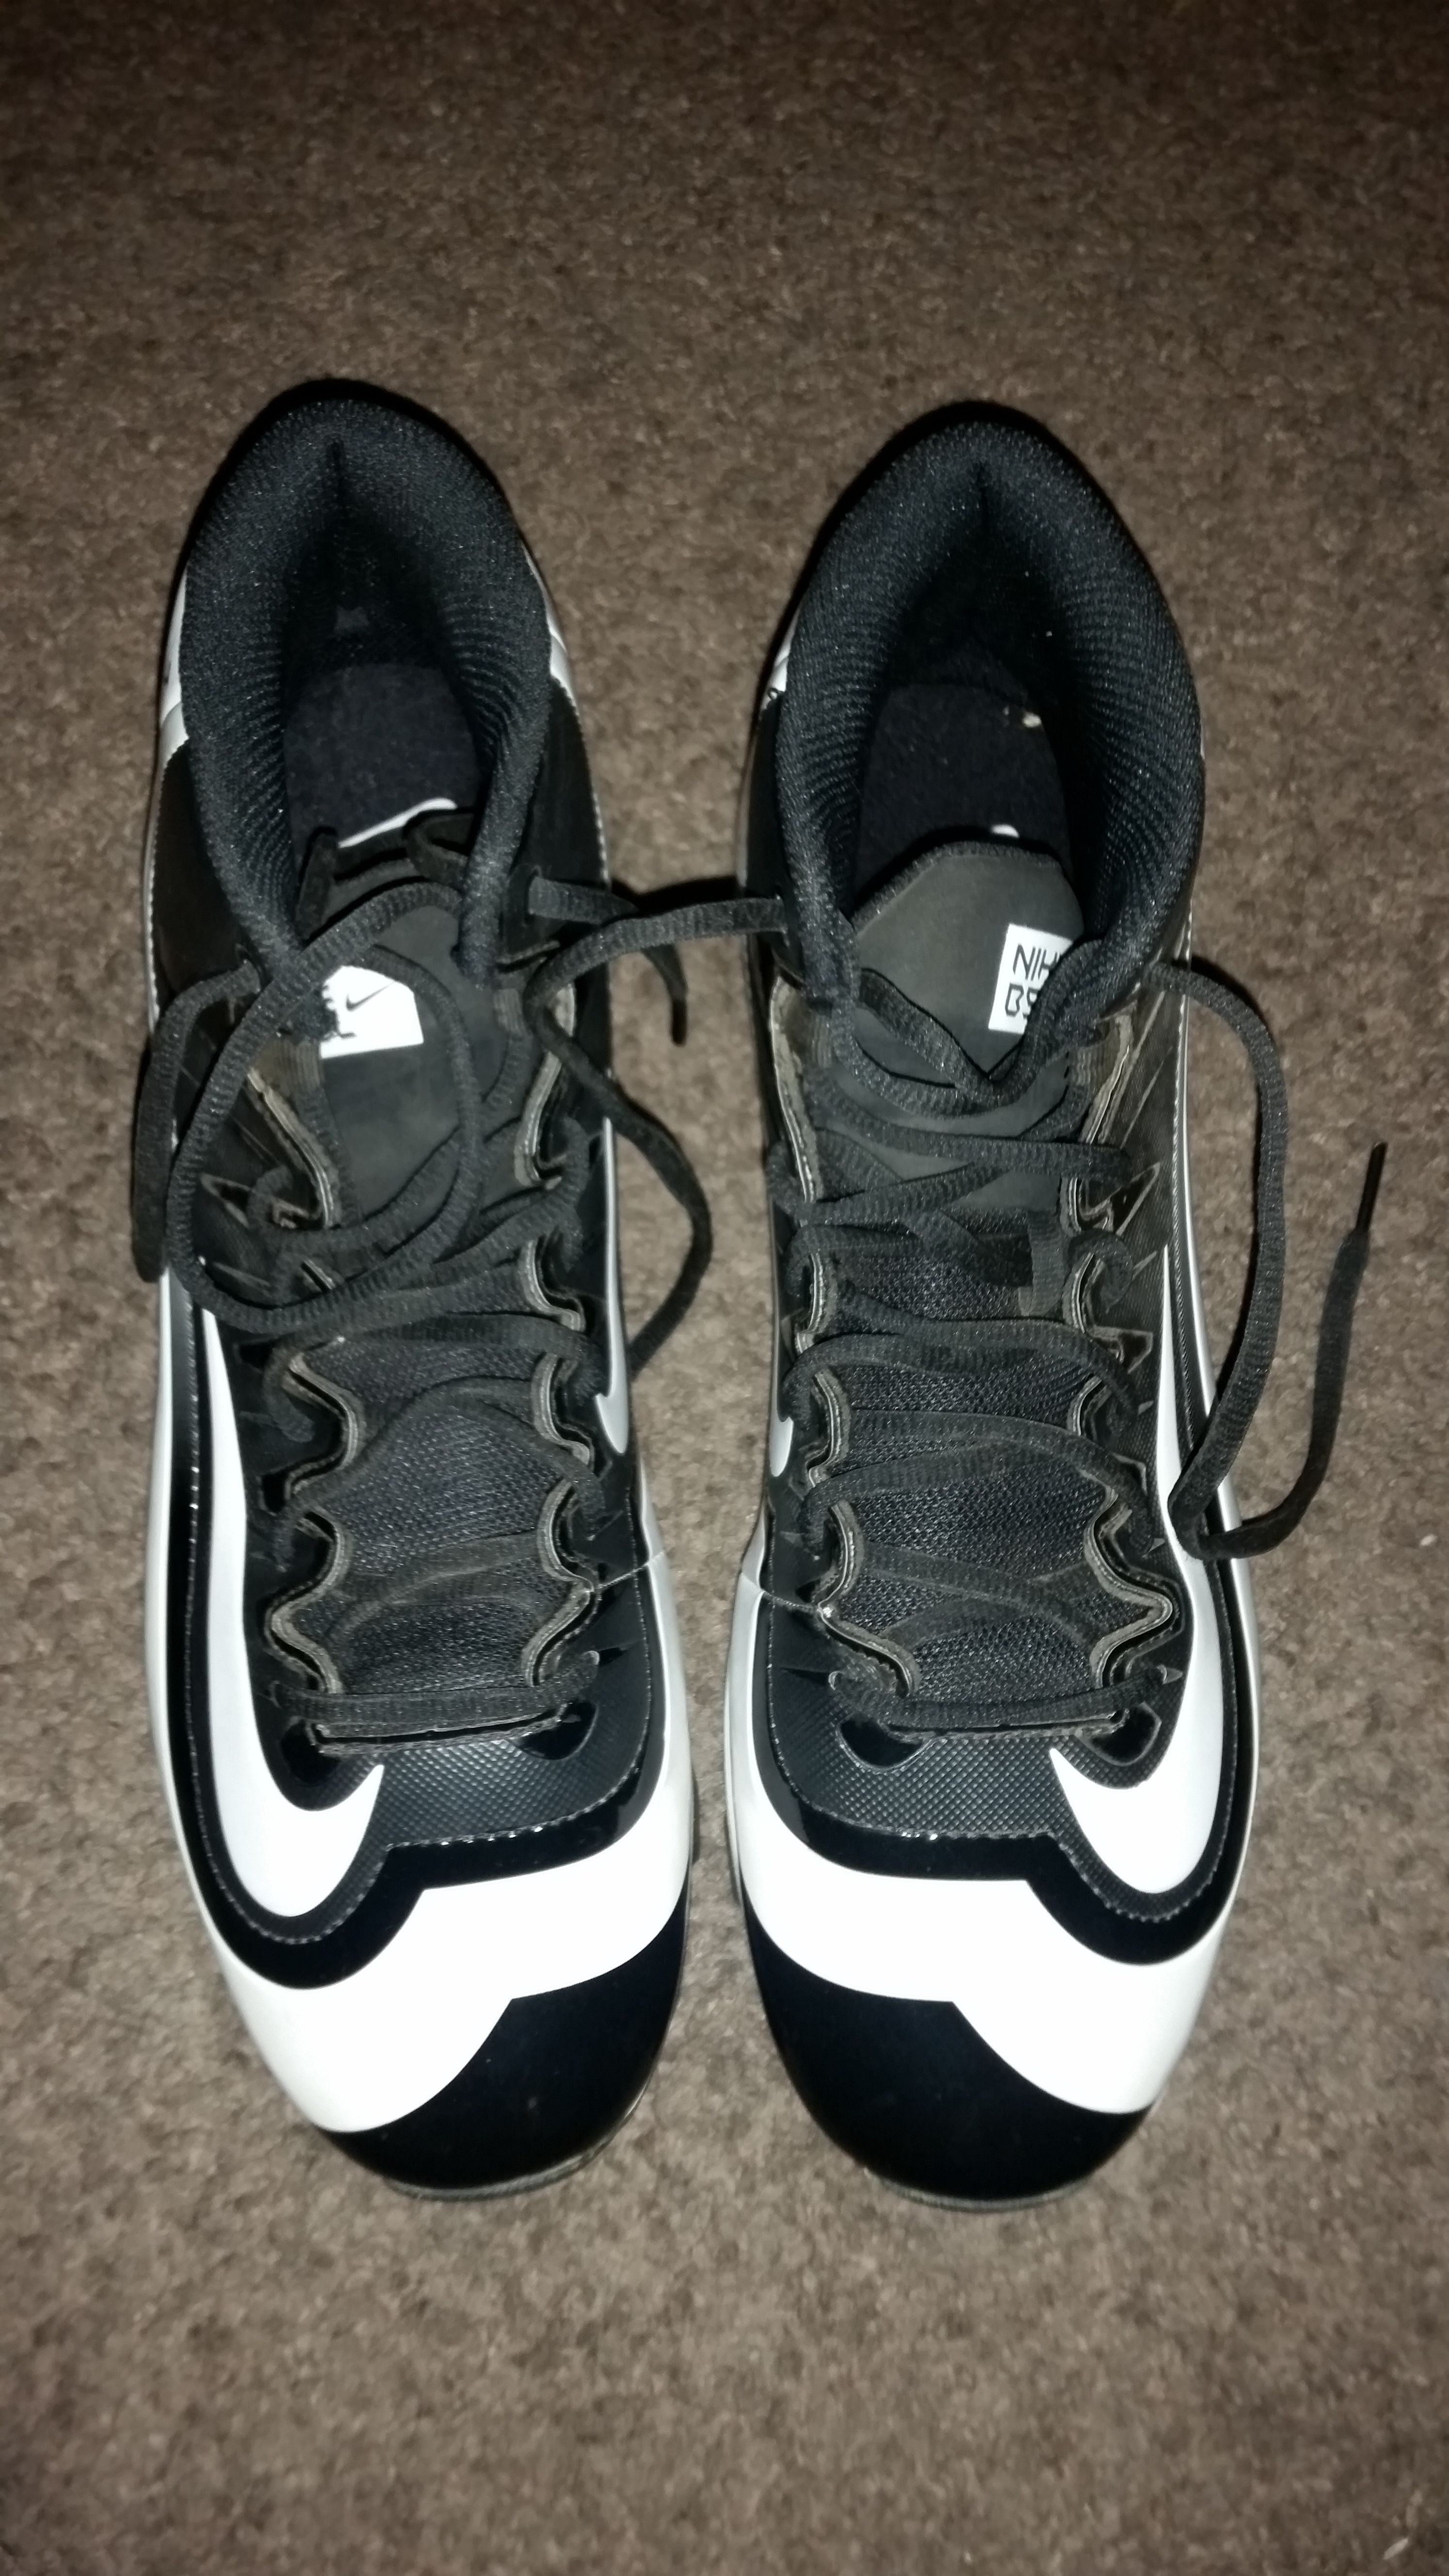 Nike 2kfilth Huarache Baseball Cleats size 12